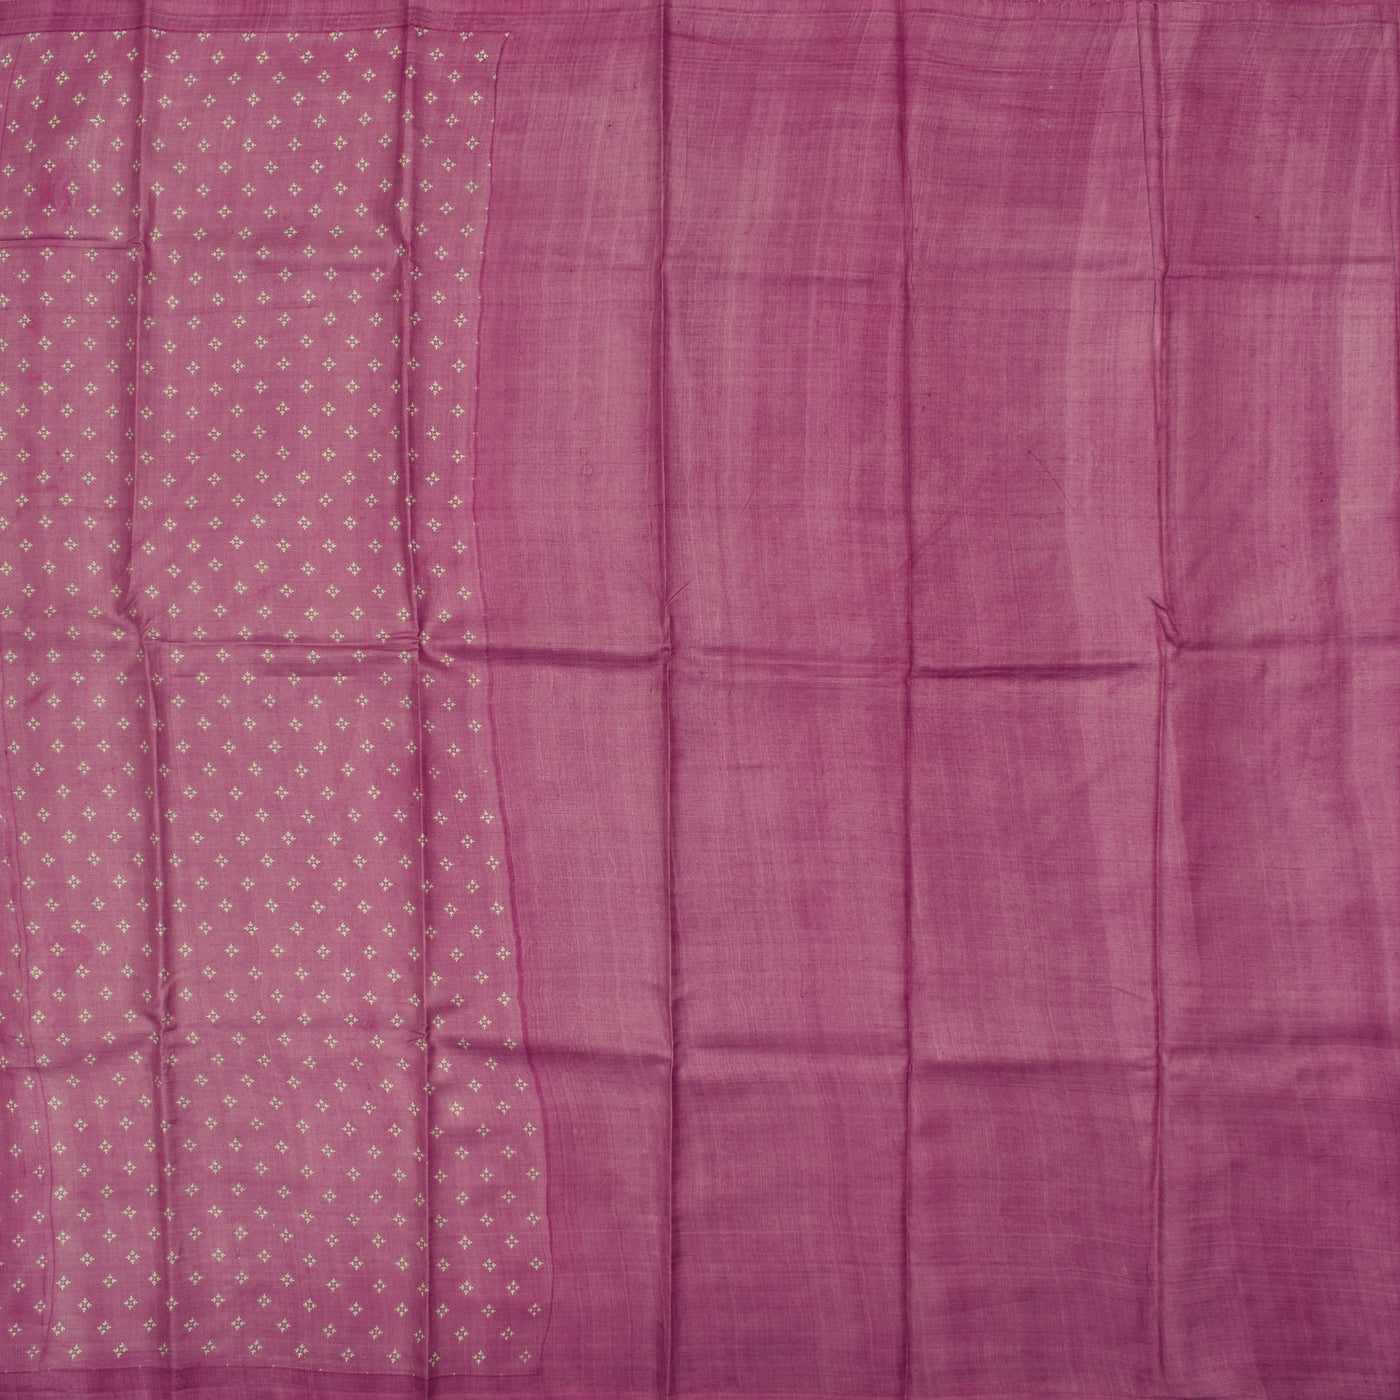 Lotus Pink Tussar Printed Saree with plain pallu